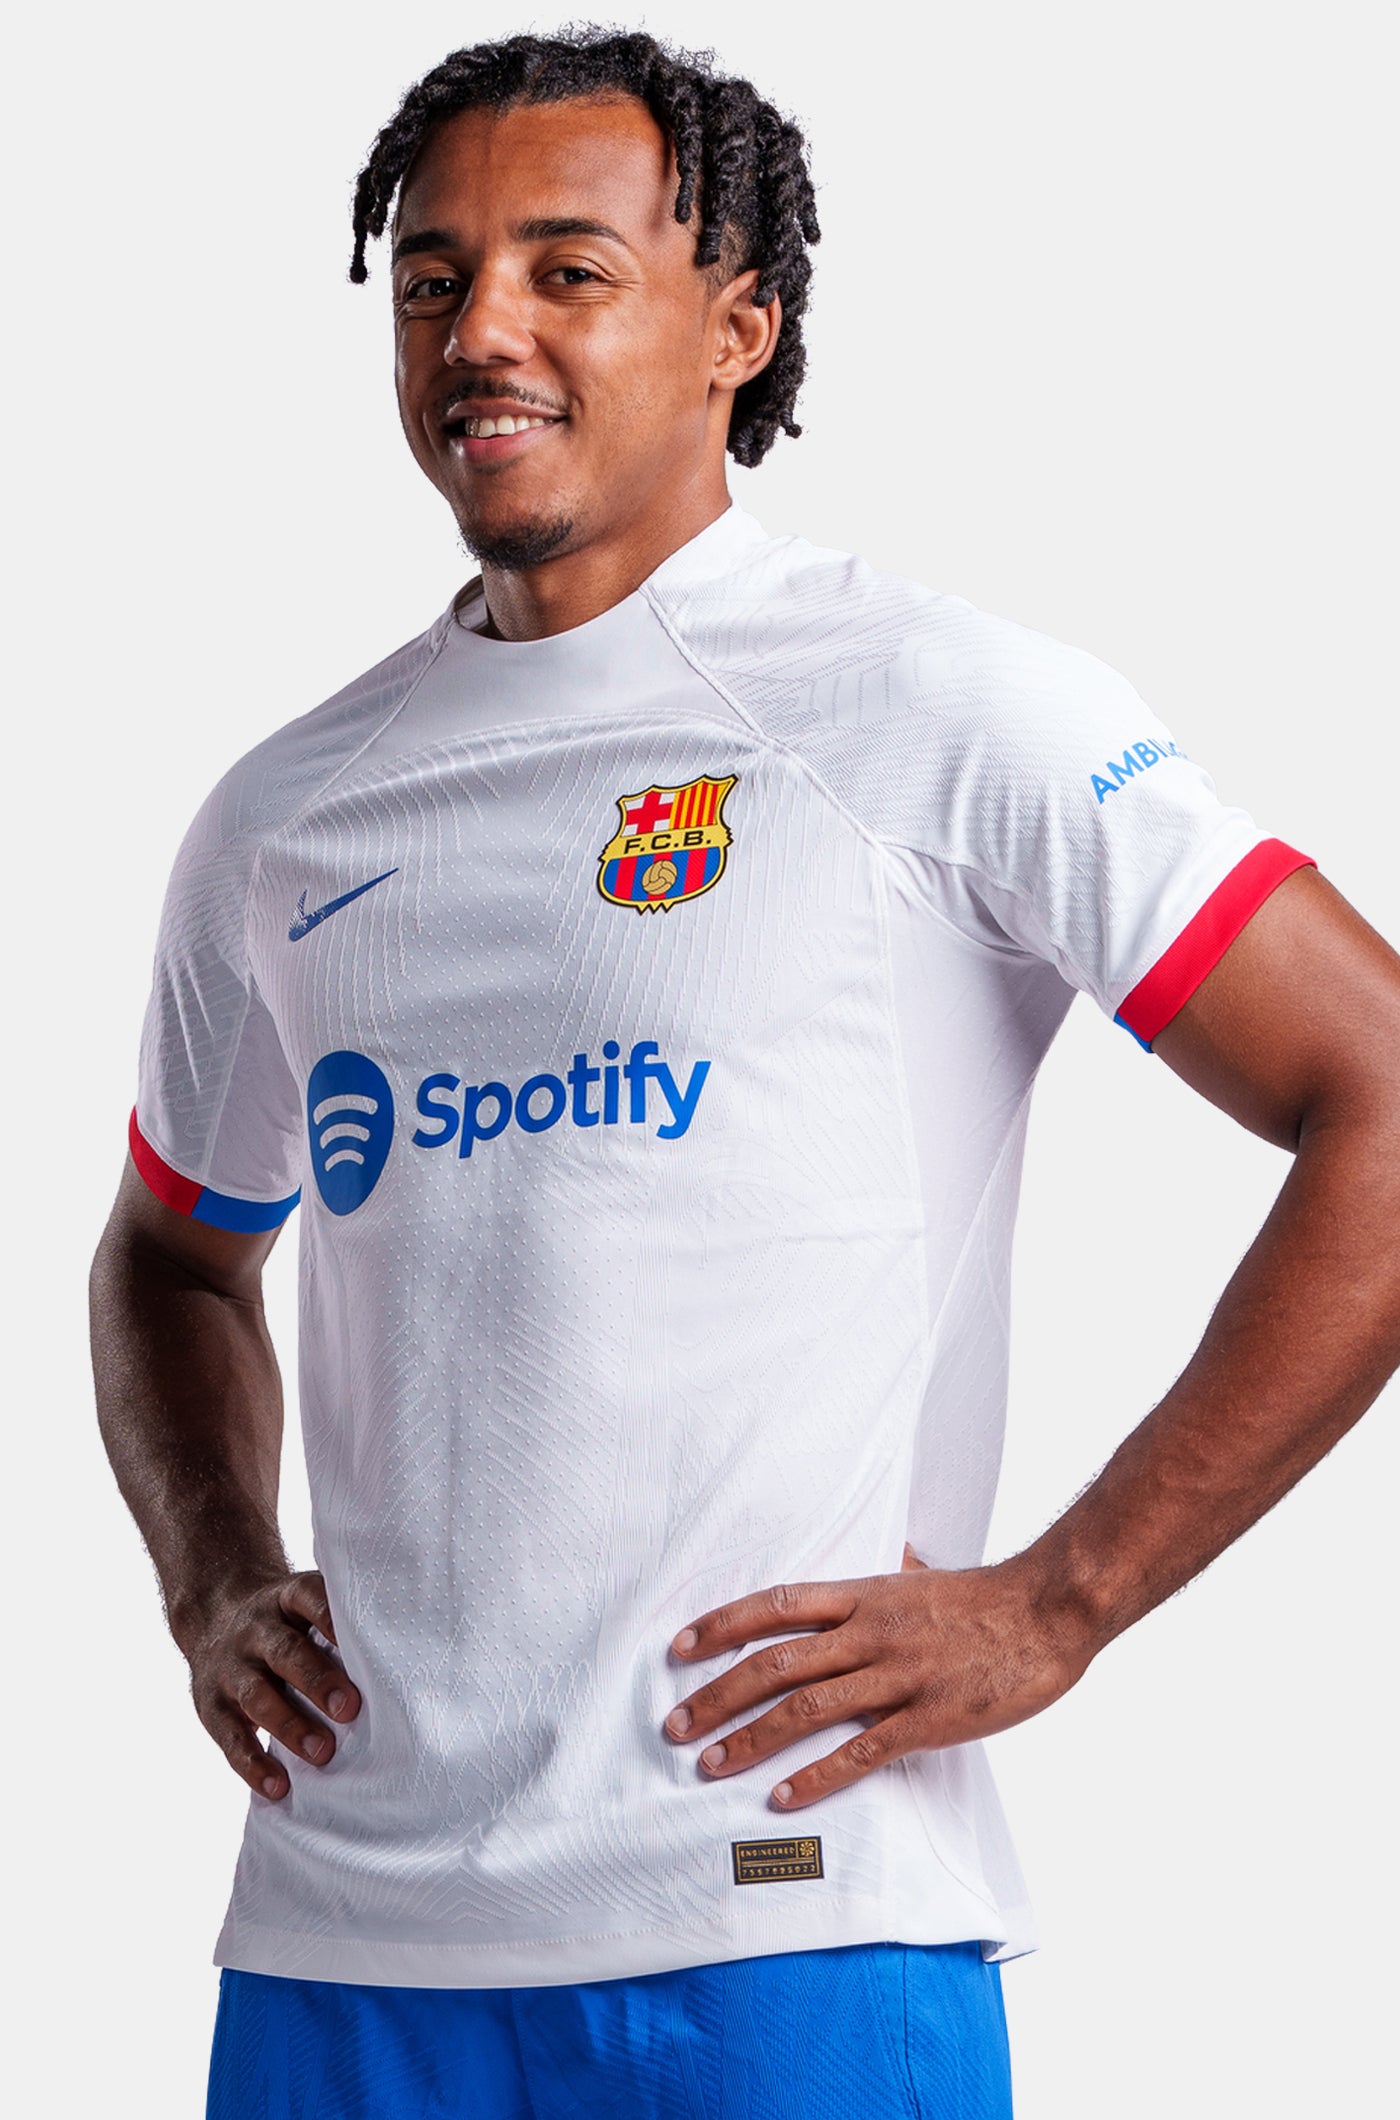 UCL FC Barcelona away shirt 23/24 Player’s Edition - KOUNDE